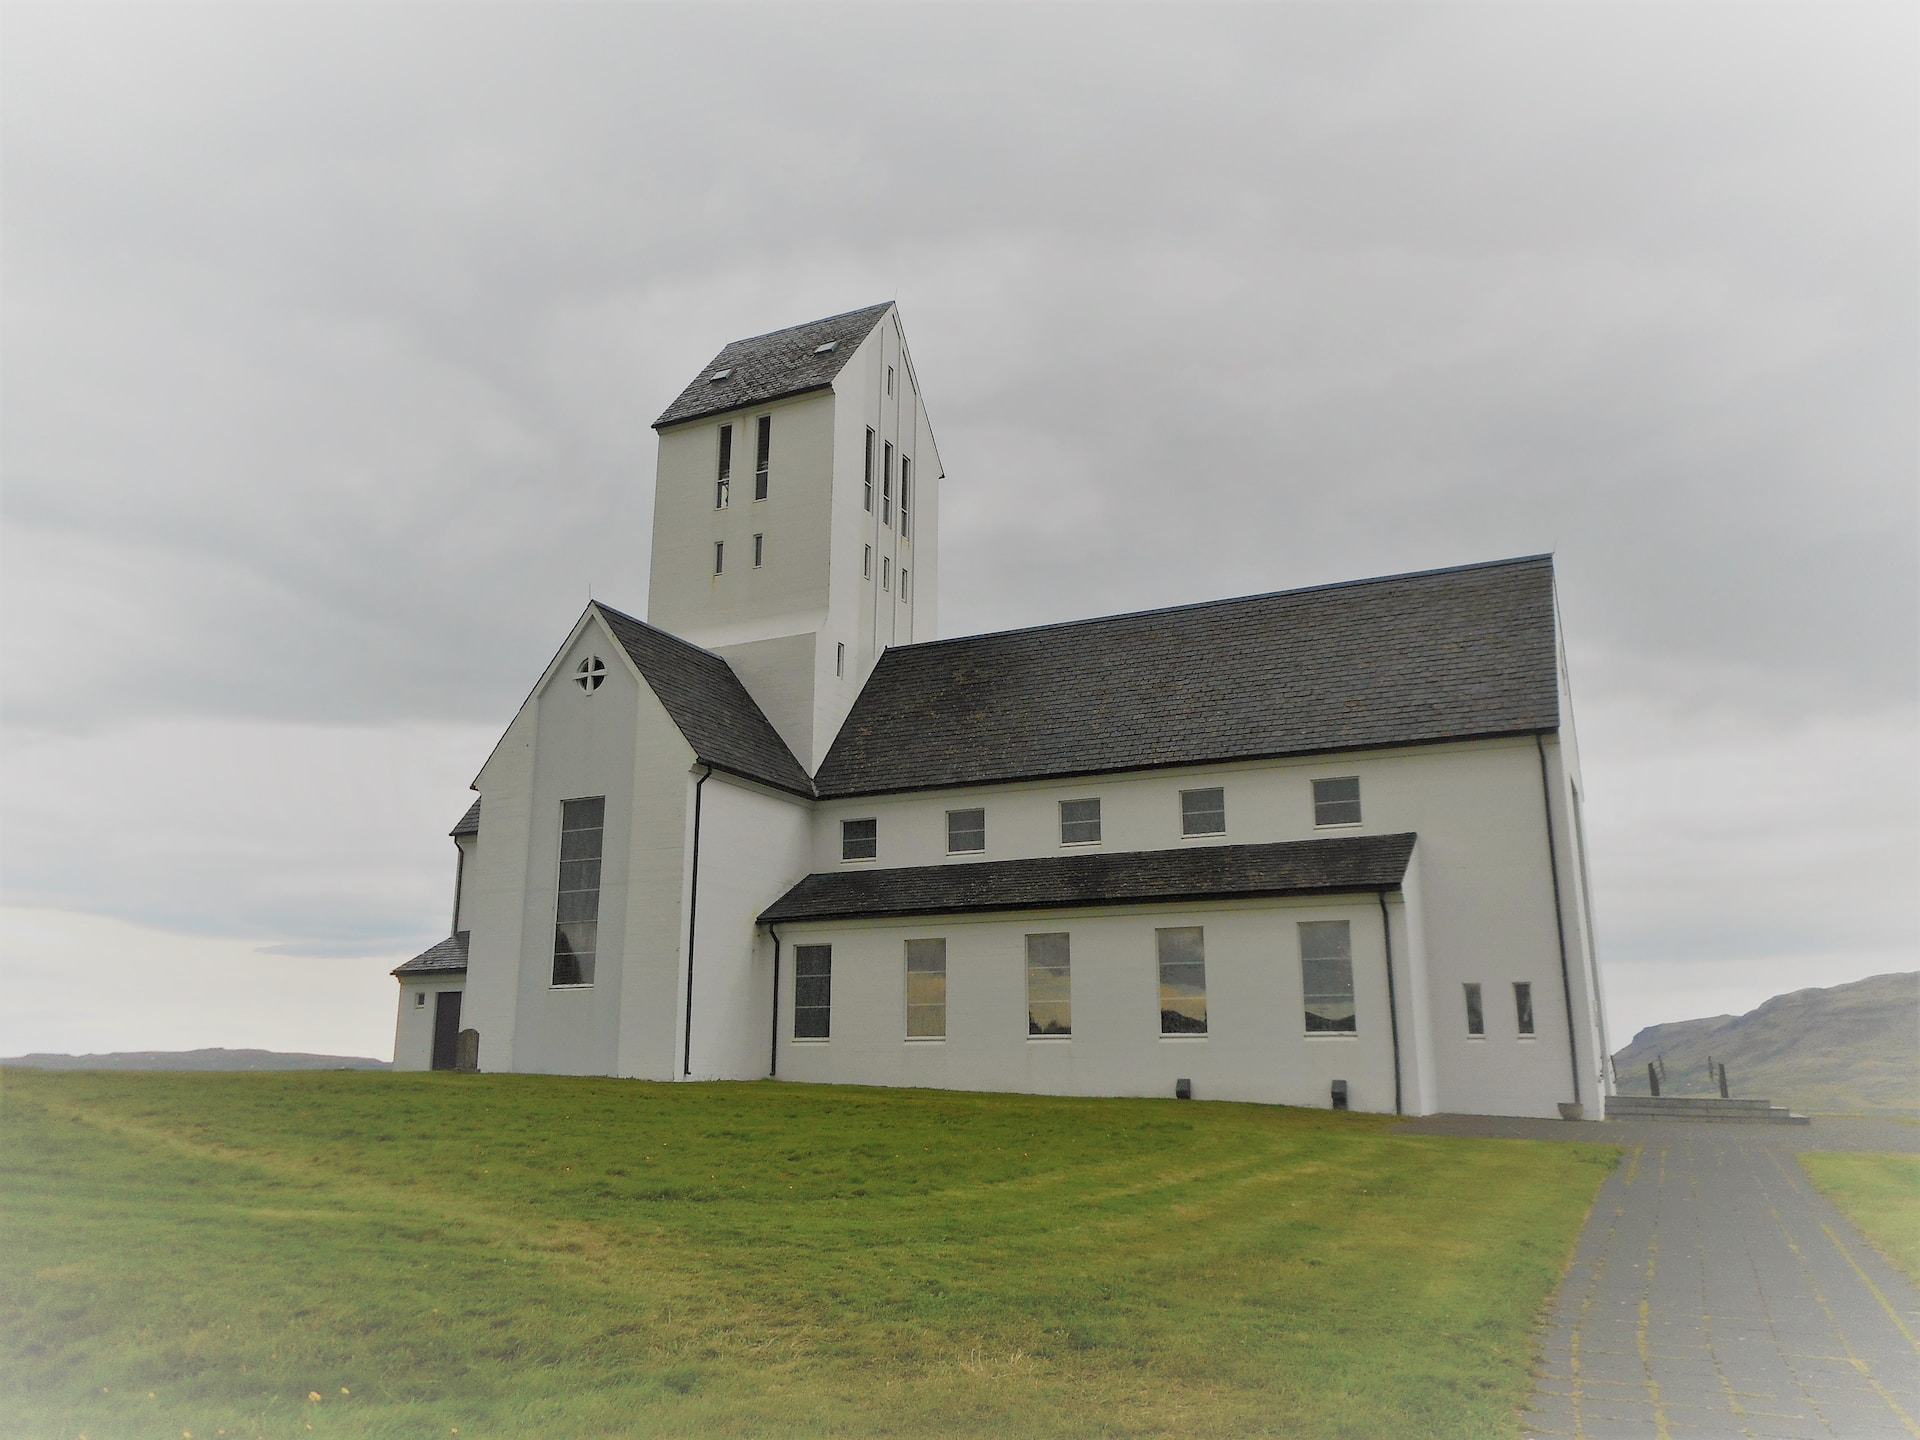 Skalholt church